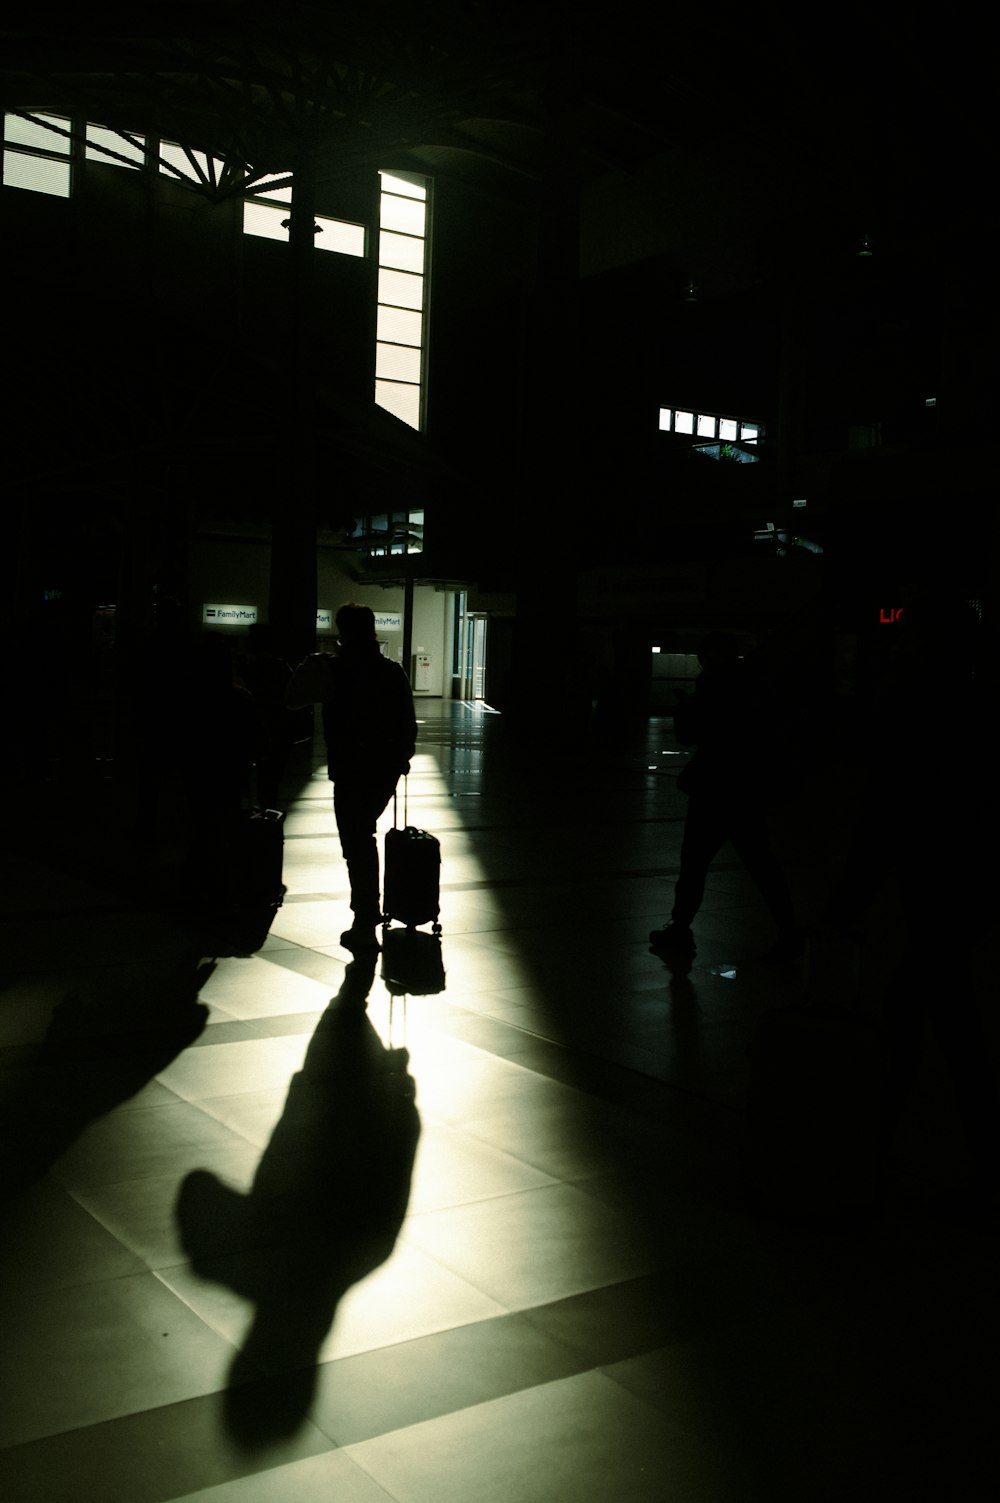 la sombra de una persona tirando de una maleta